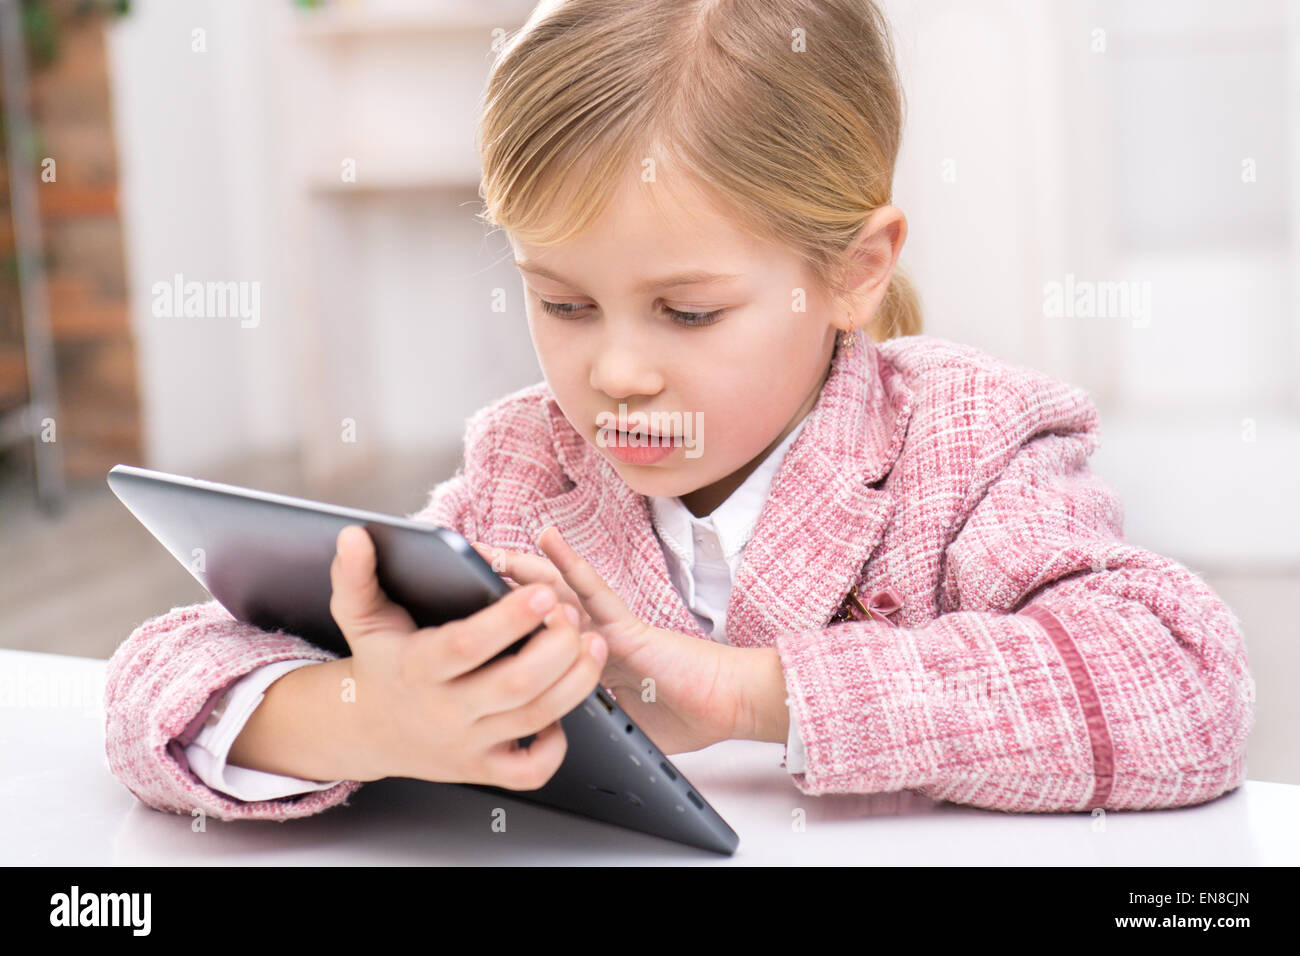 Little girl using tablet computer Stock Photo